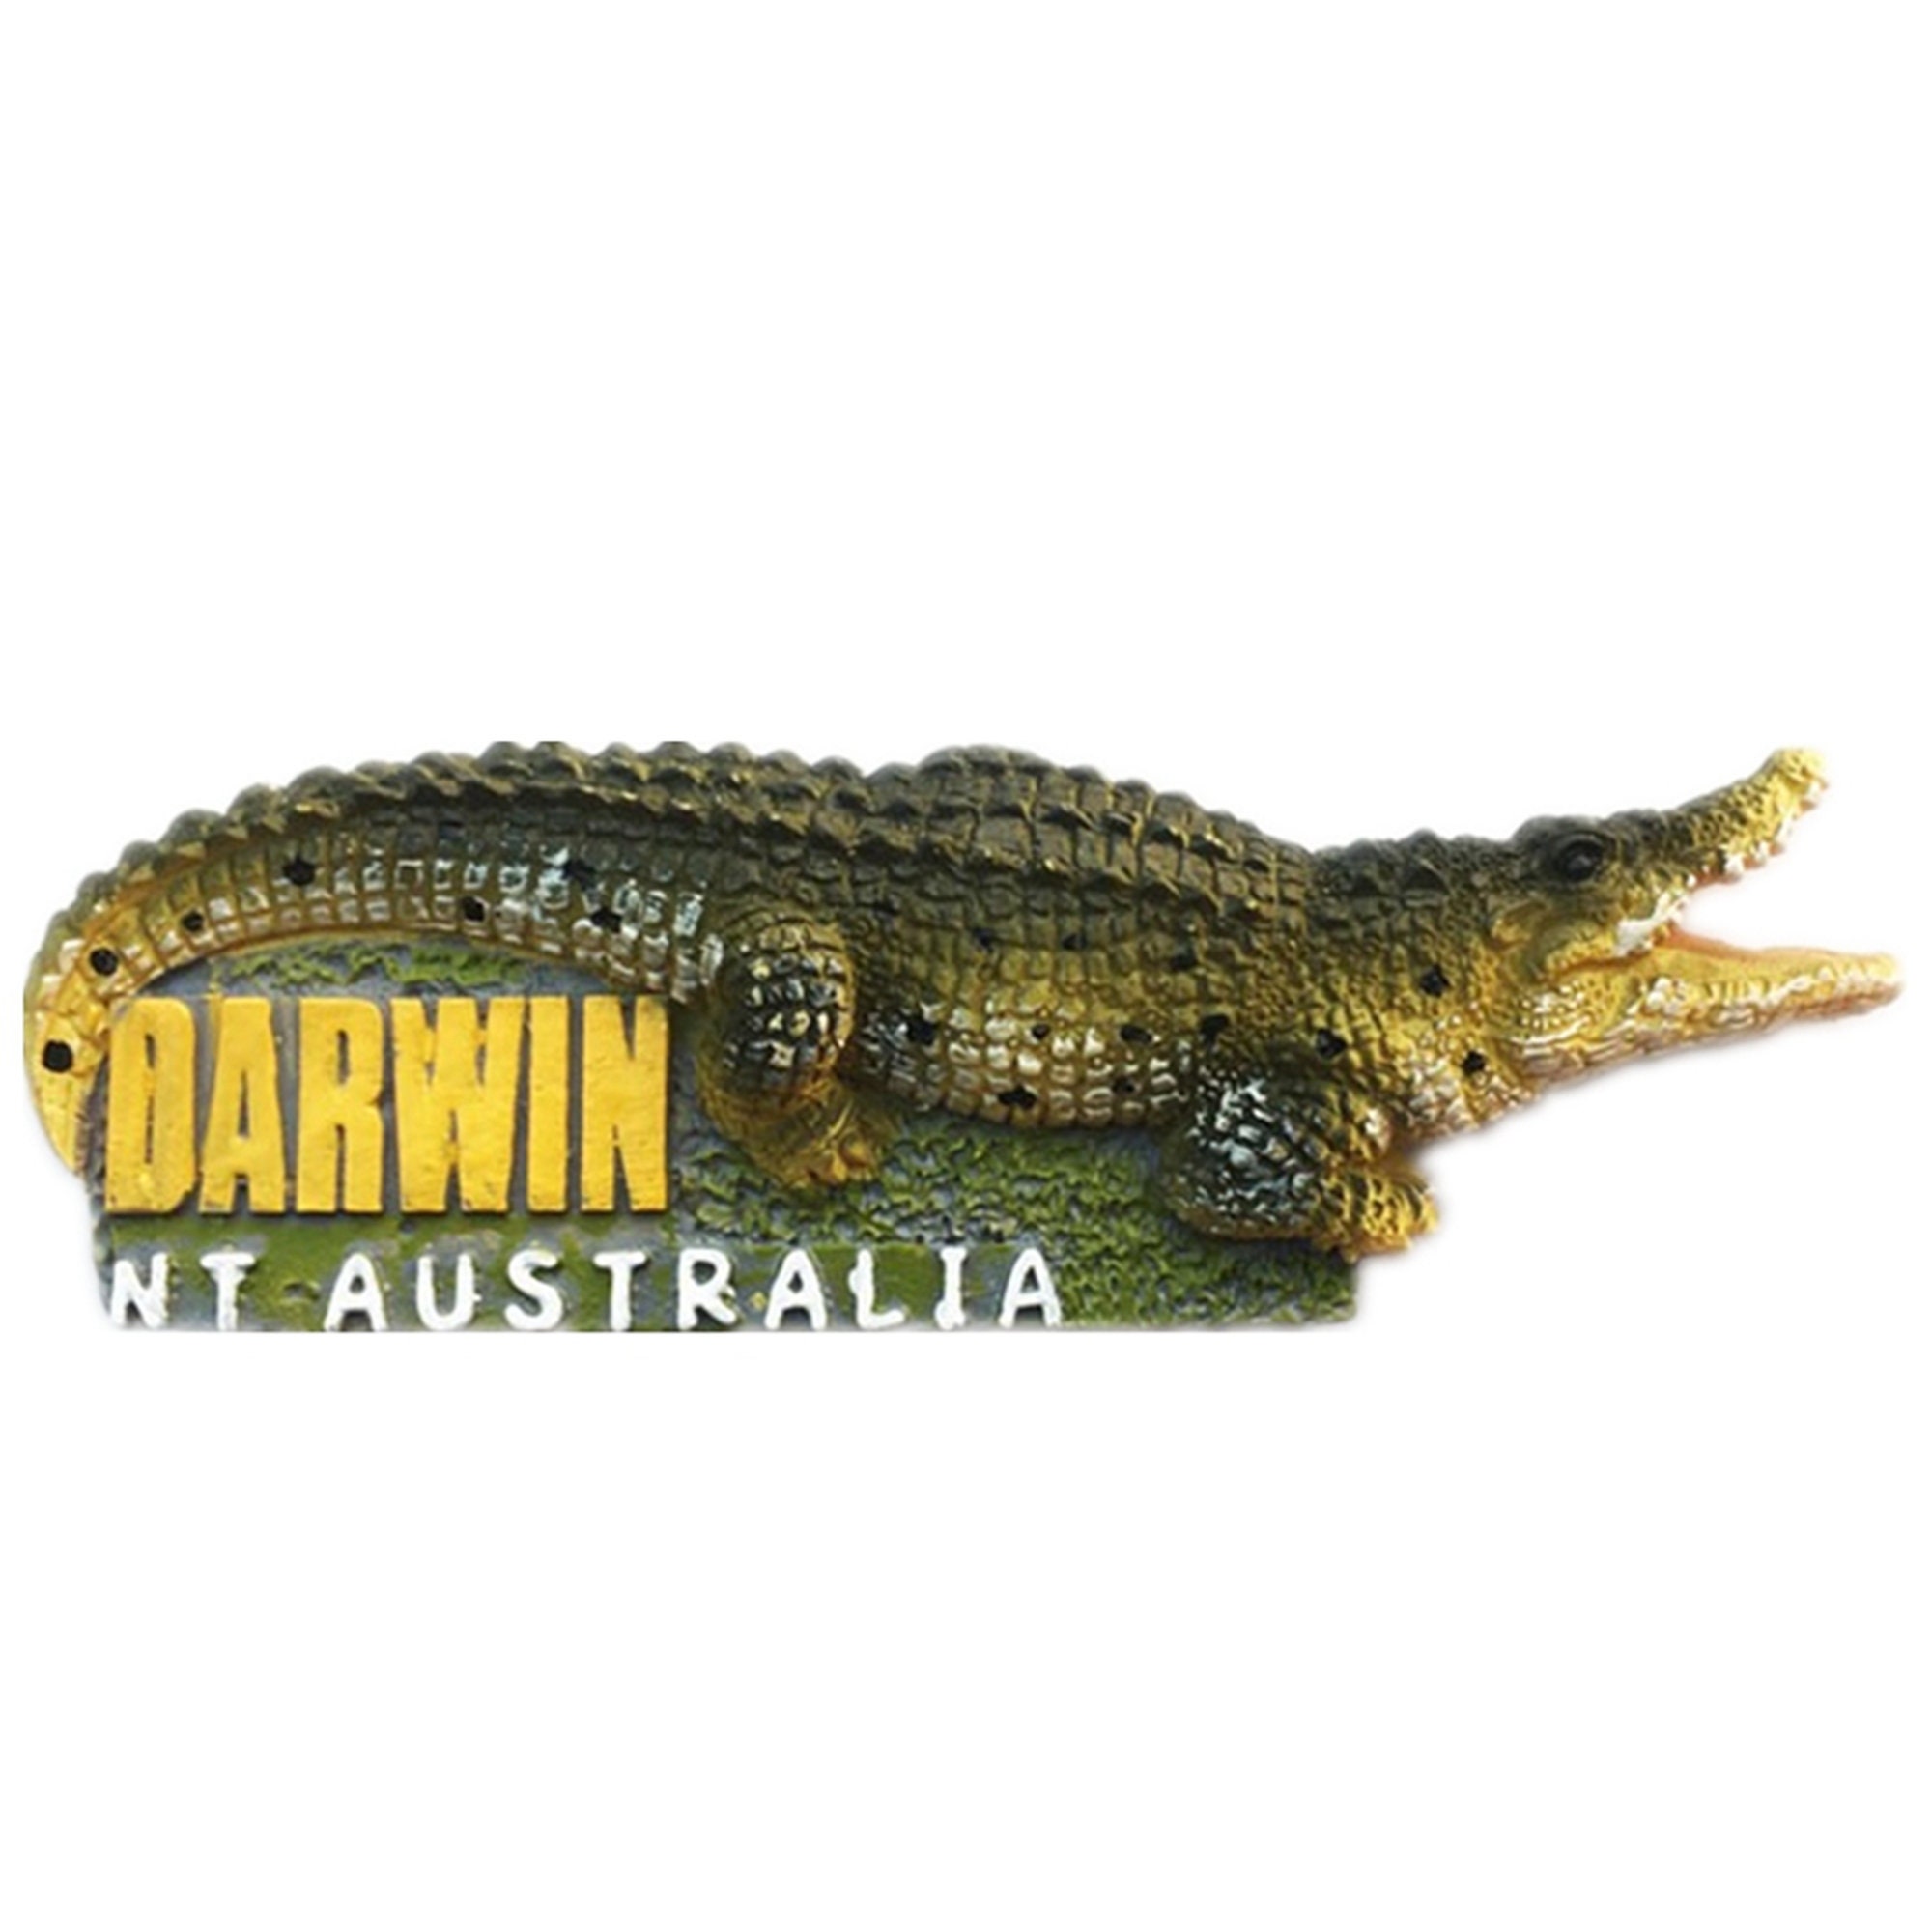 Crocodile Darwin Australia Fridge Magnet Travel Souvenir Gift Collection  Craft Refrigerator Decoration -  India